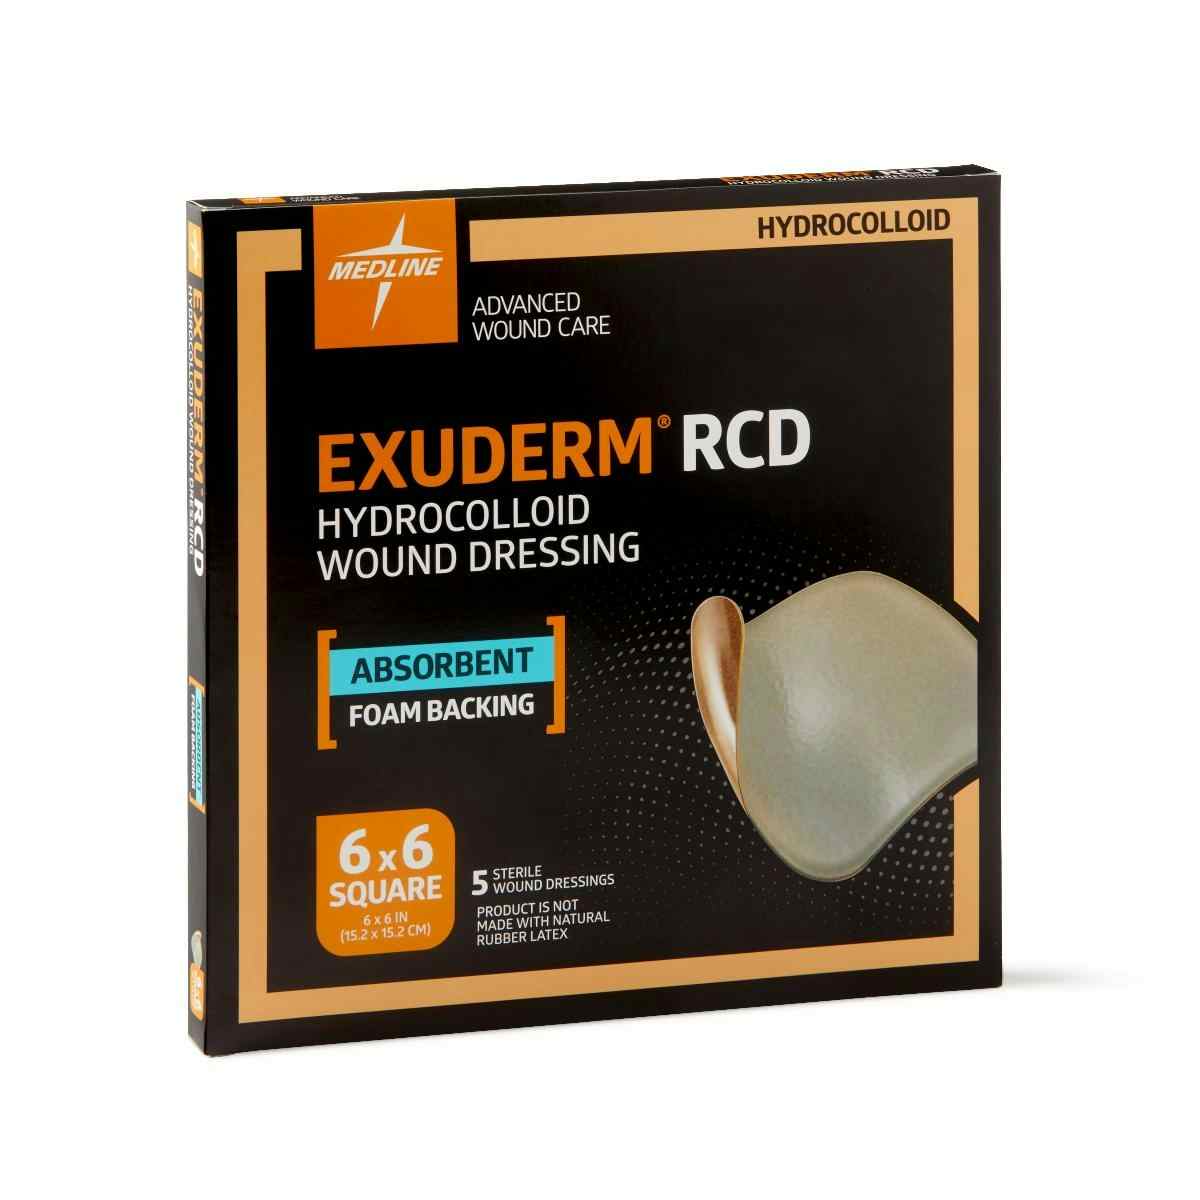 Exuderm RCD Hydrocolloid Wound Dressing, MSC5225, 6" X 6" - Box of 5 